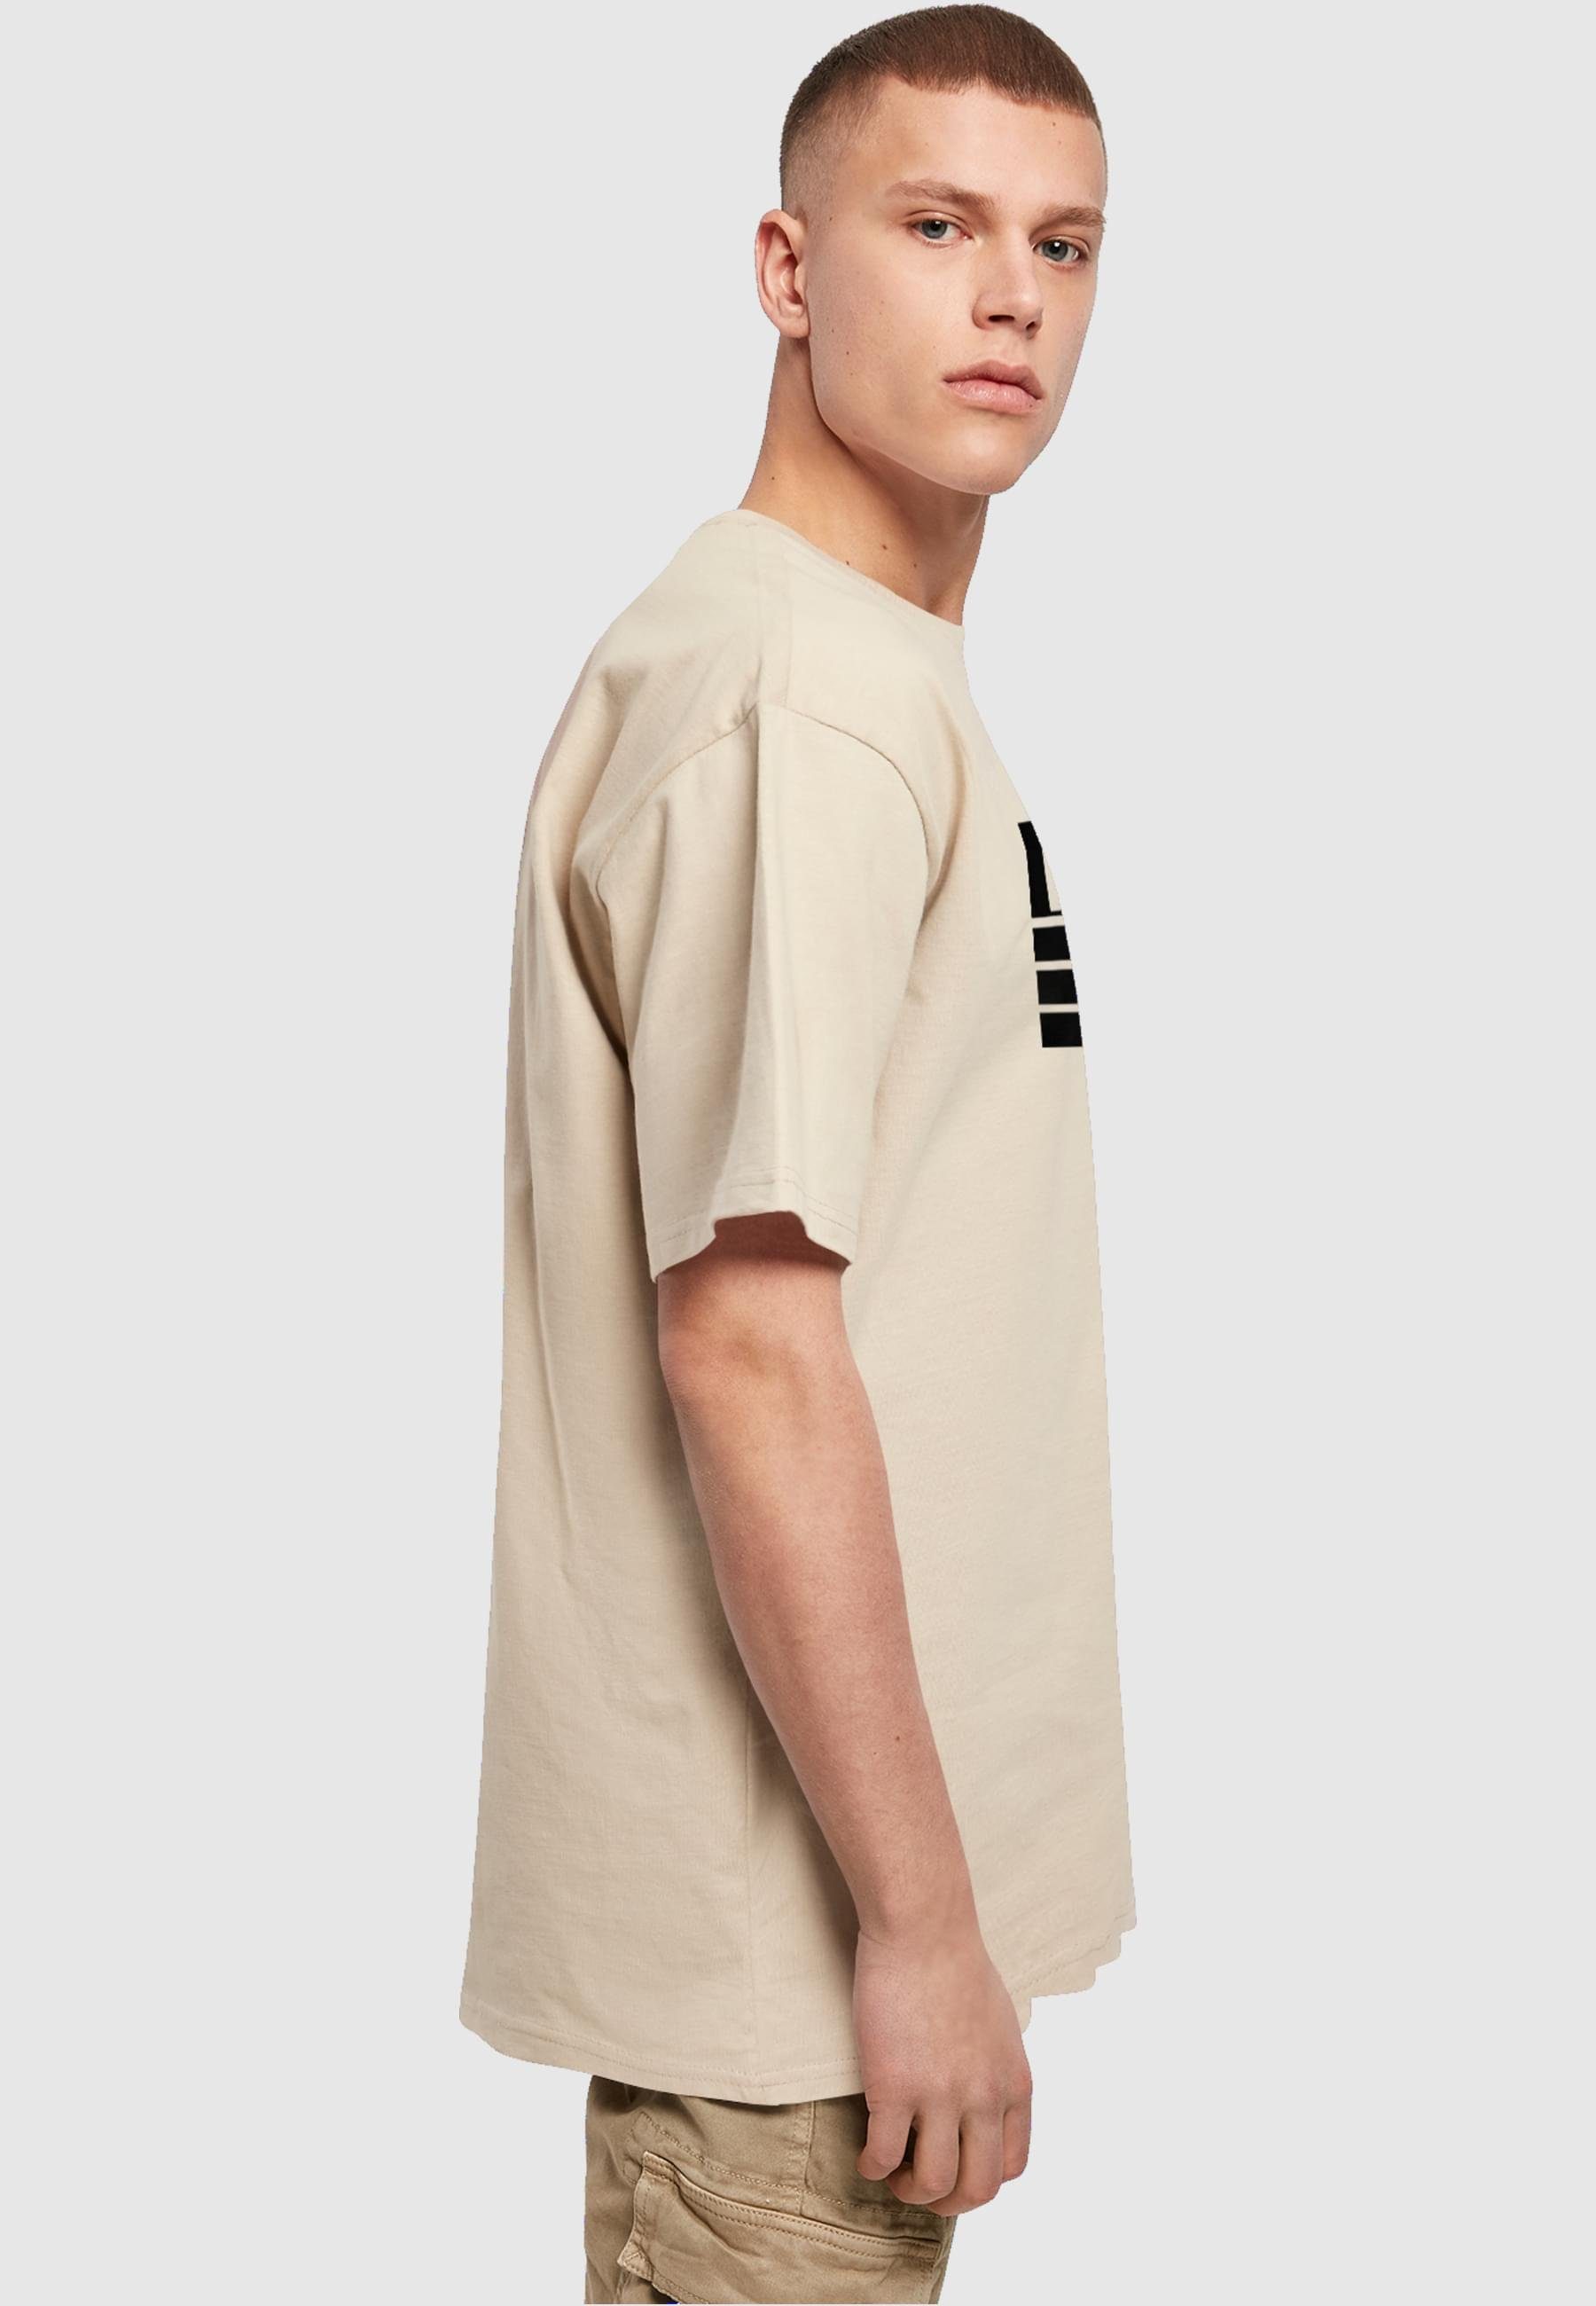 (1-tlg) Edition Oversize wet T-Shirt sand - Layla Limited Herren Merchcode Tee